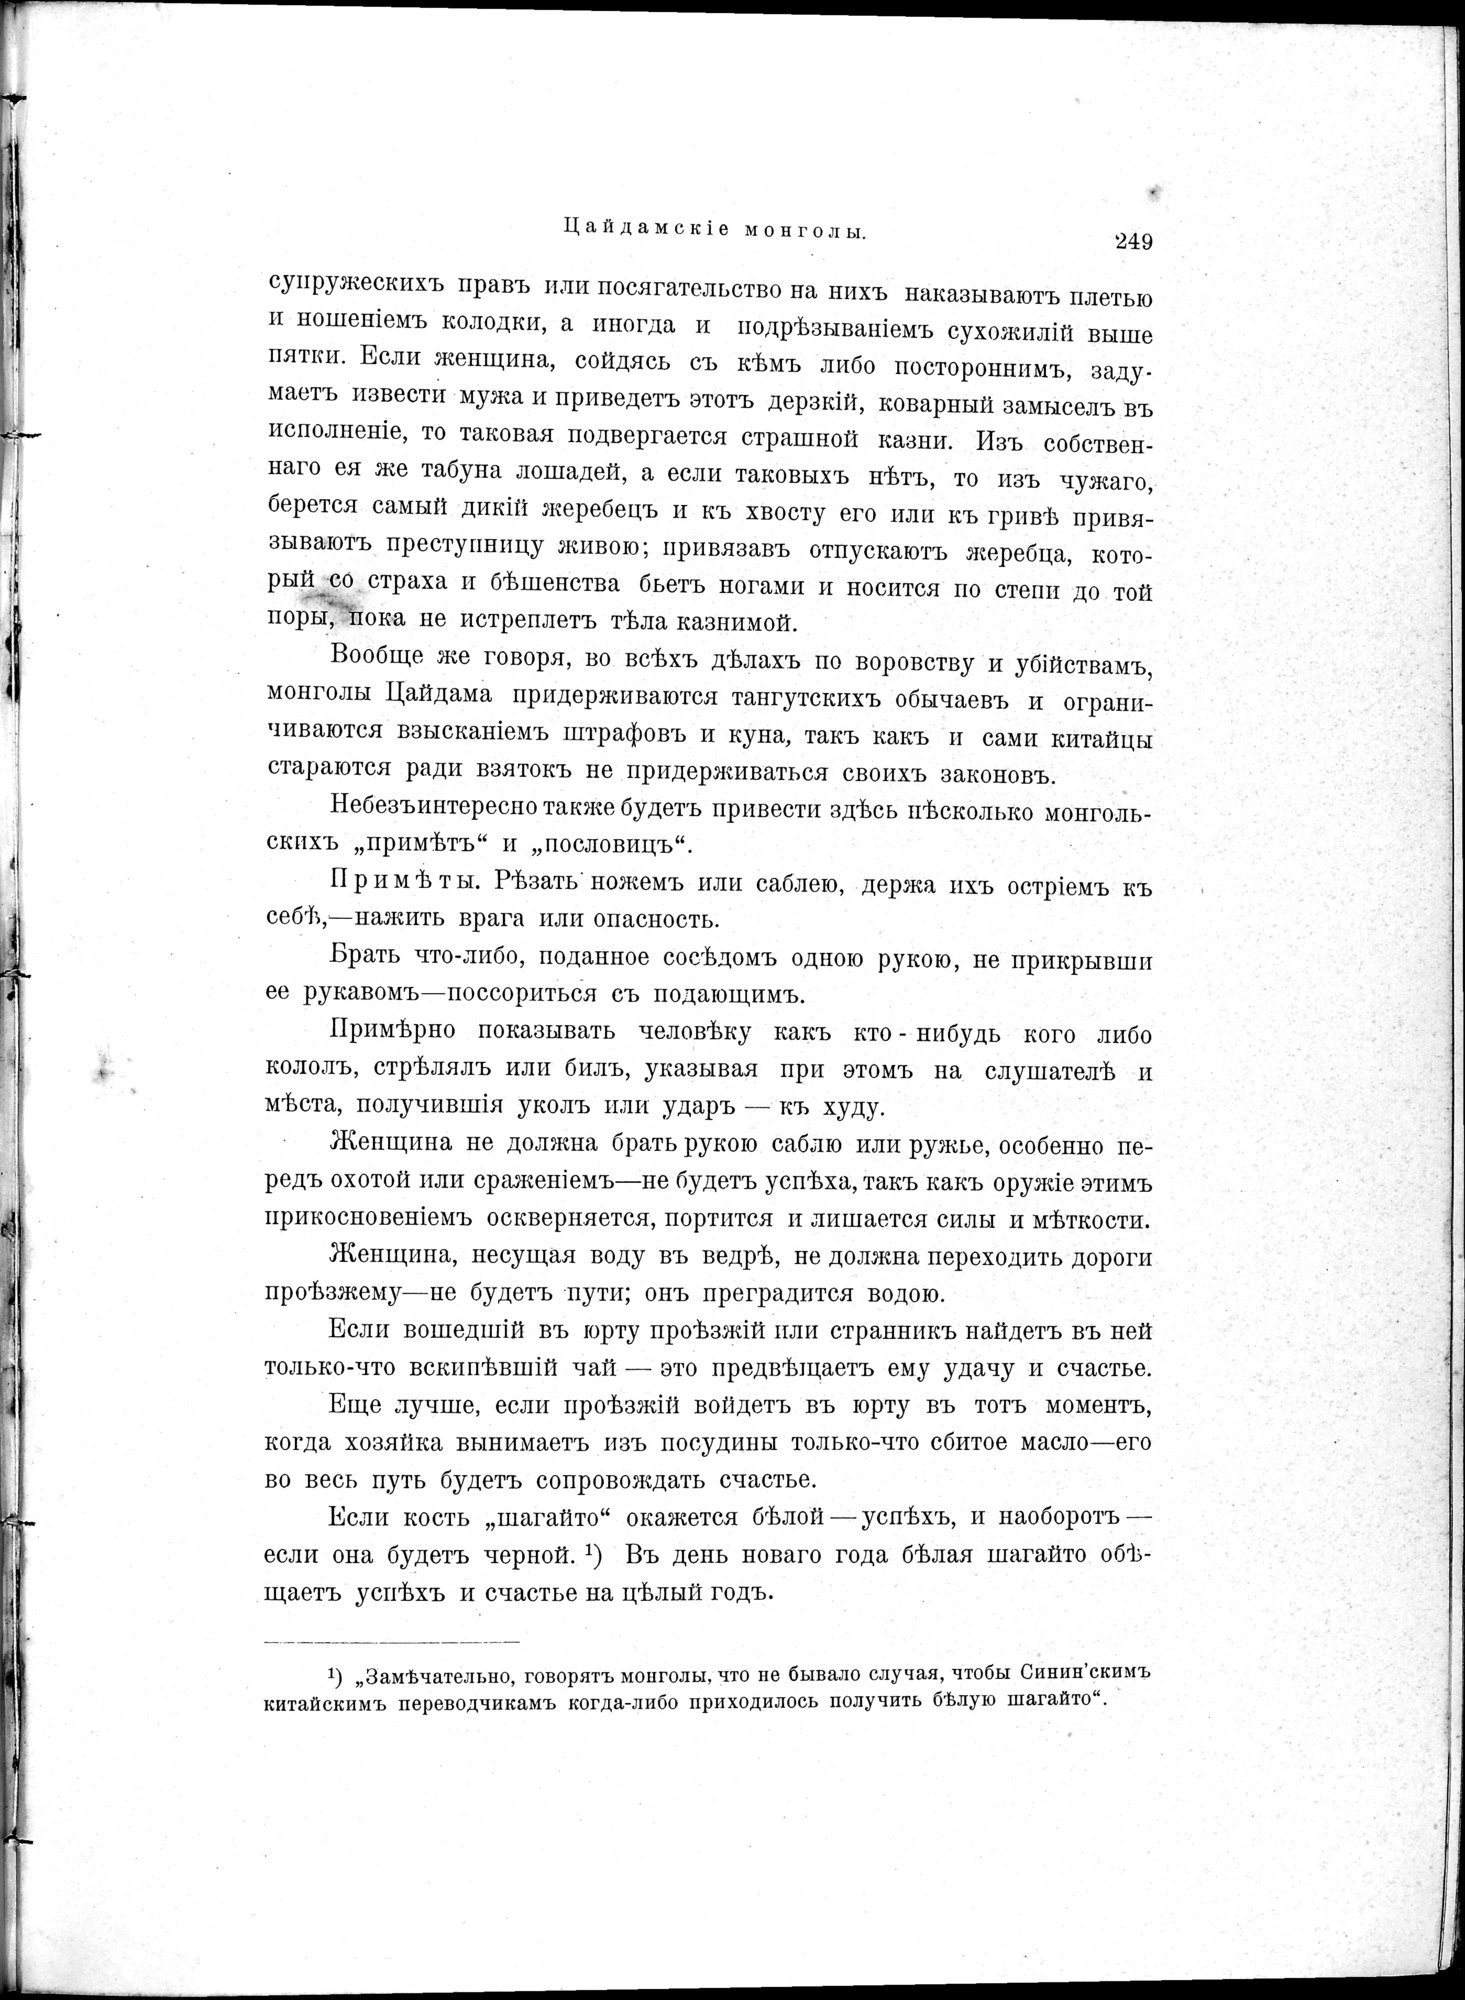 Mongoliia i Kam : vol.1 / Page 301 (Grayscale High Resolution Image)